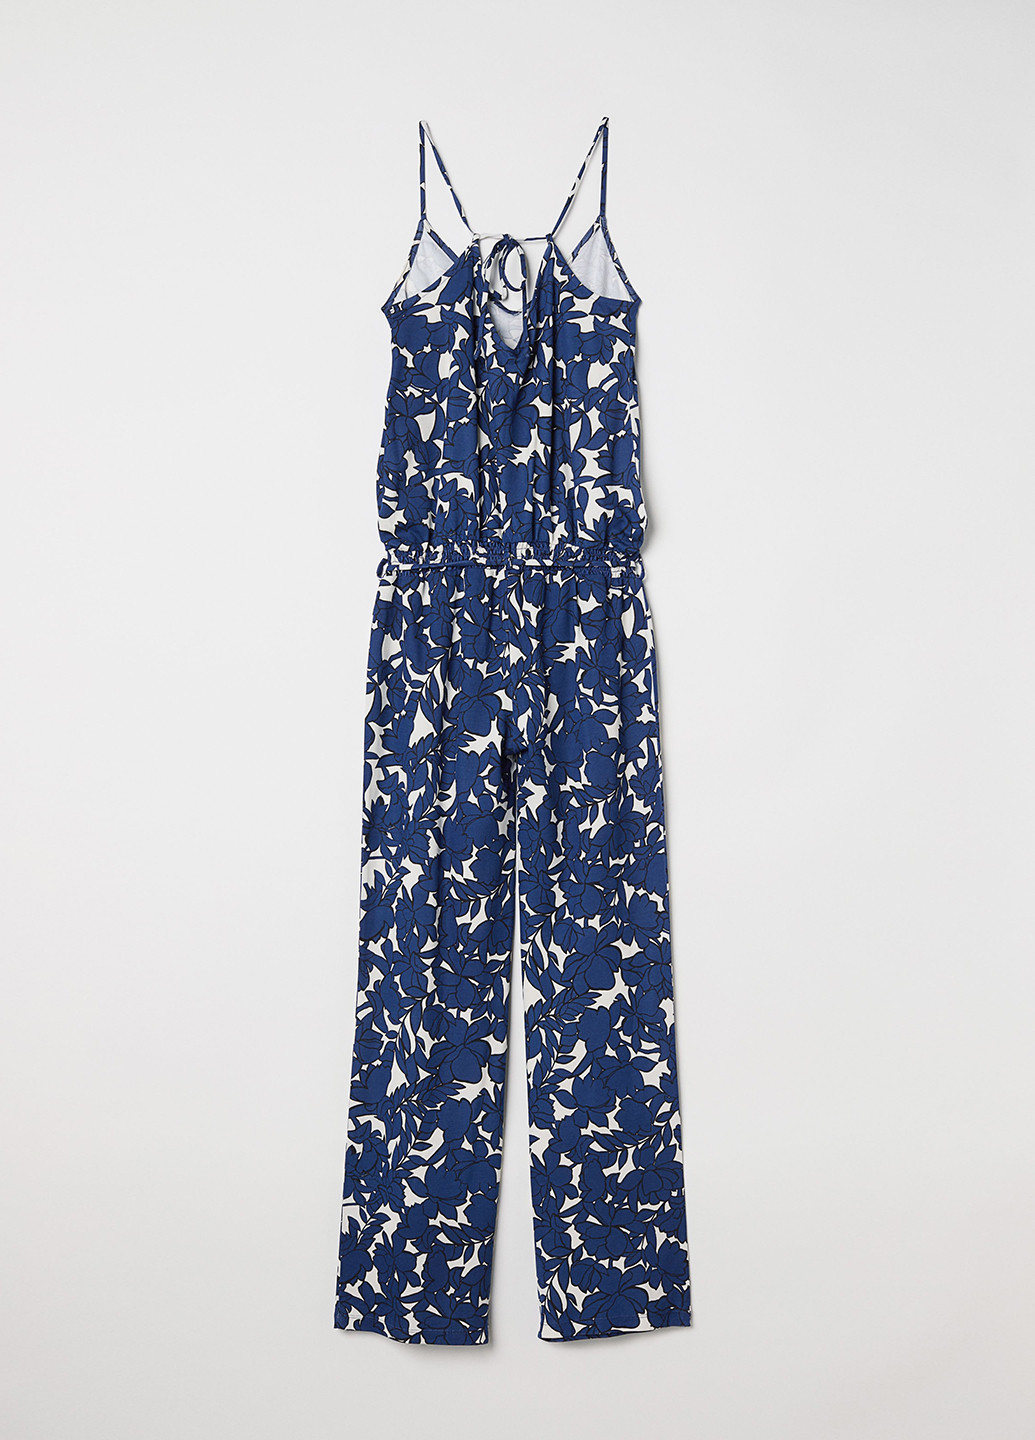 Комбинезон H&M комбинезон-брюки цветочный синий кэжуал модал